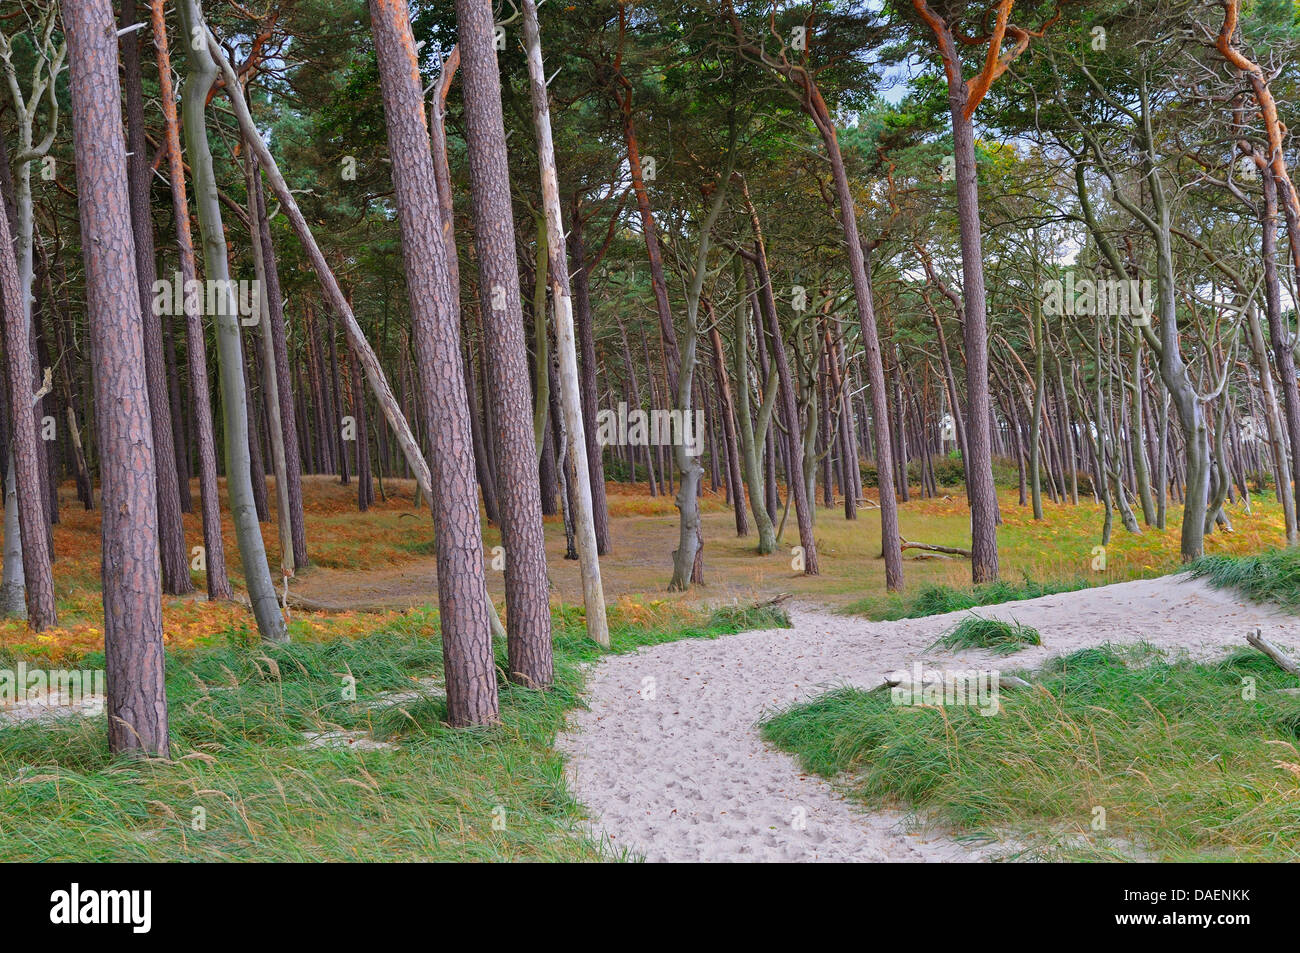 Scotch pine, Scots pine (Pinus sylvestris), sand path through a forest at the Baltic Sea coast, Germany, Mecklenburg-Western Pomerania, Western Pomerania Lagoon Area National Park Stock Photo